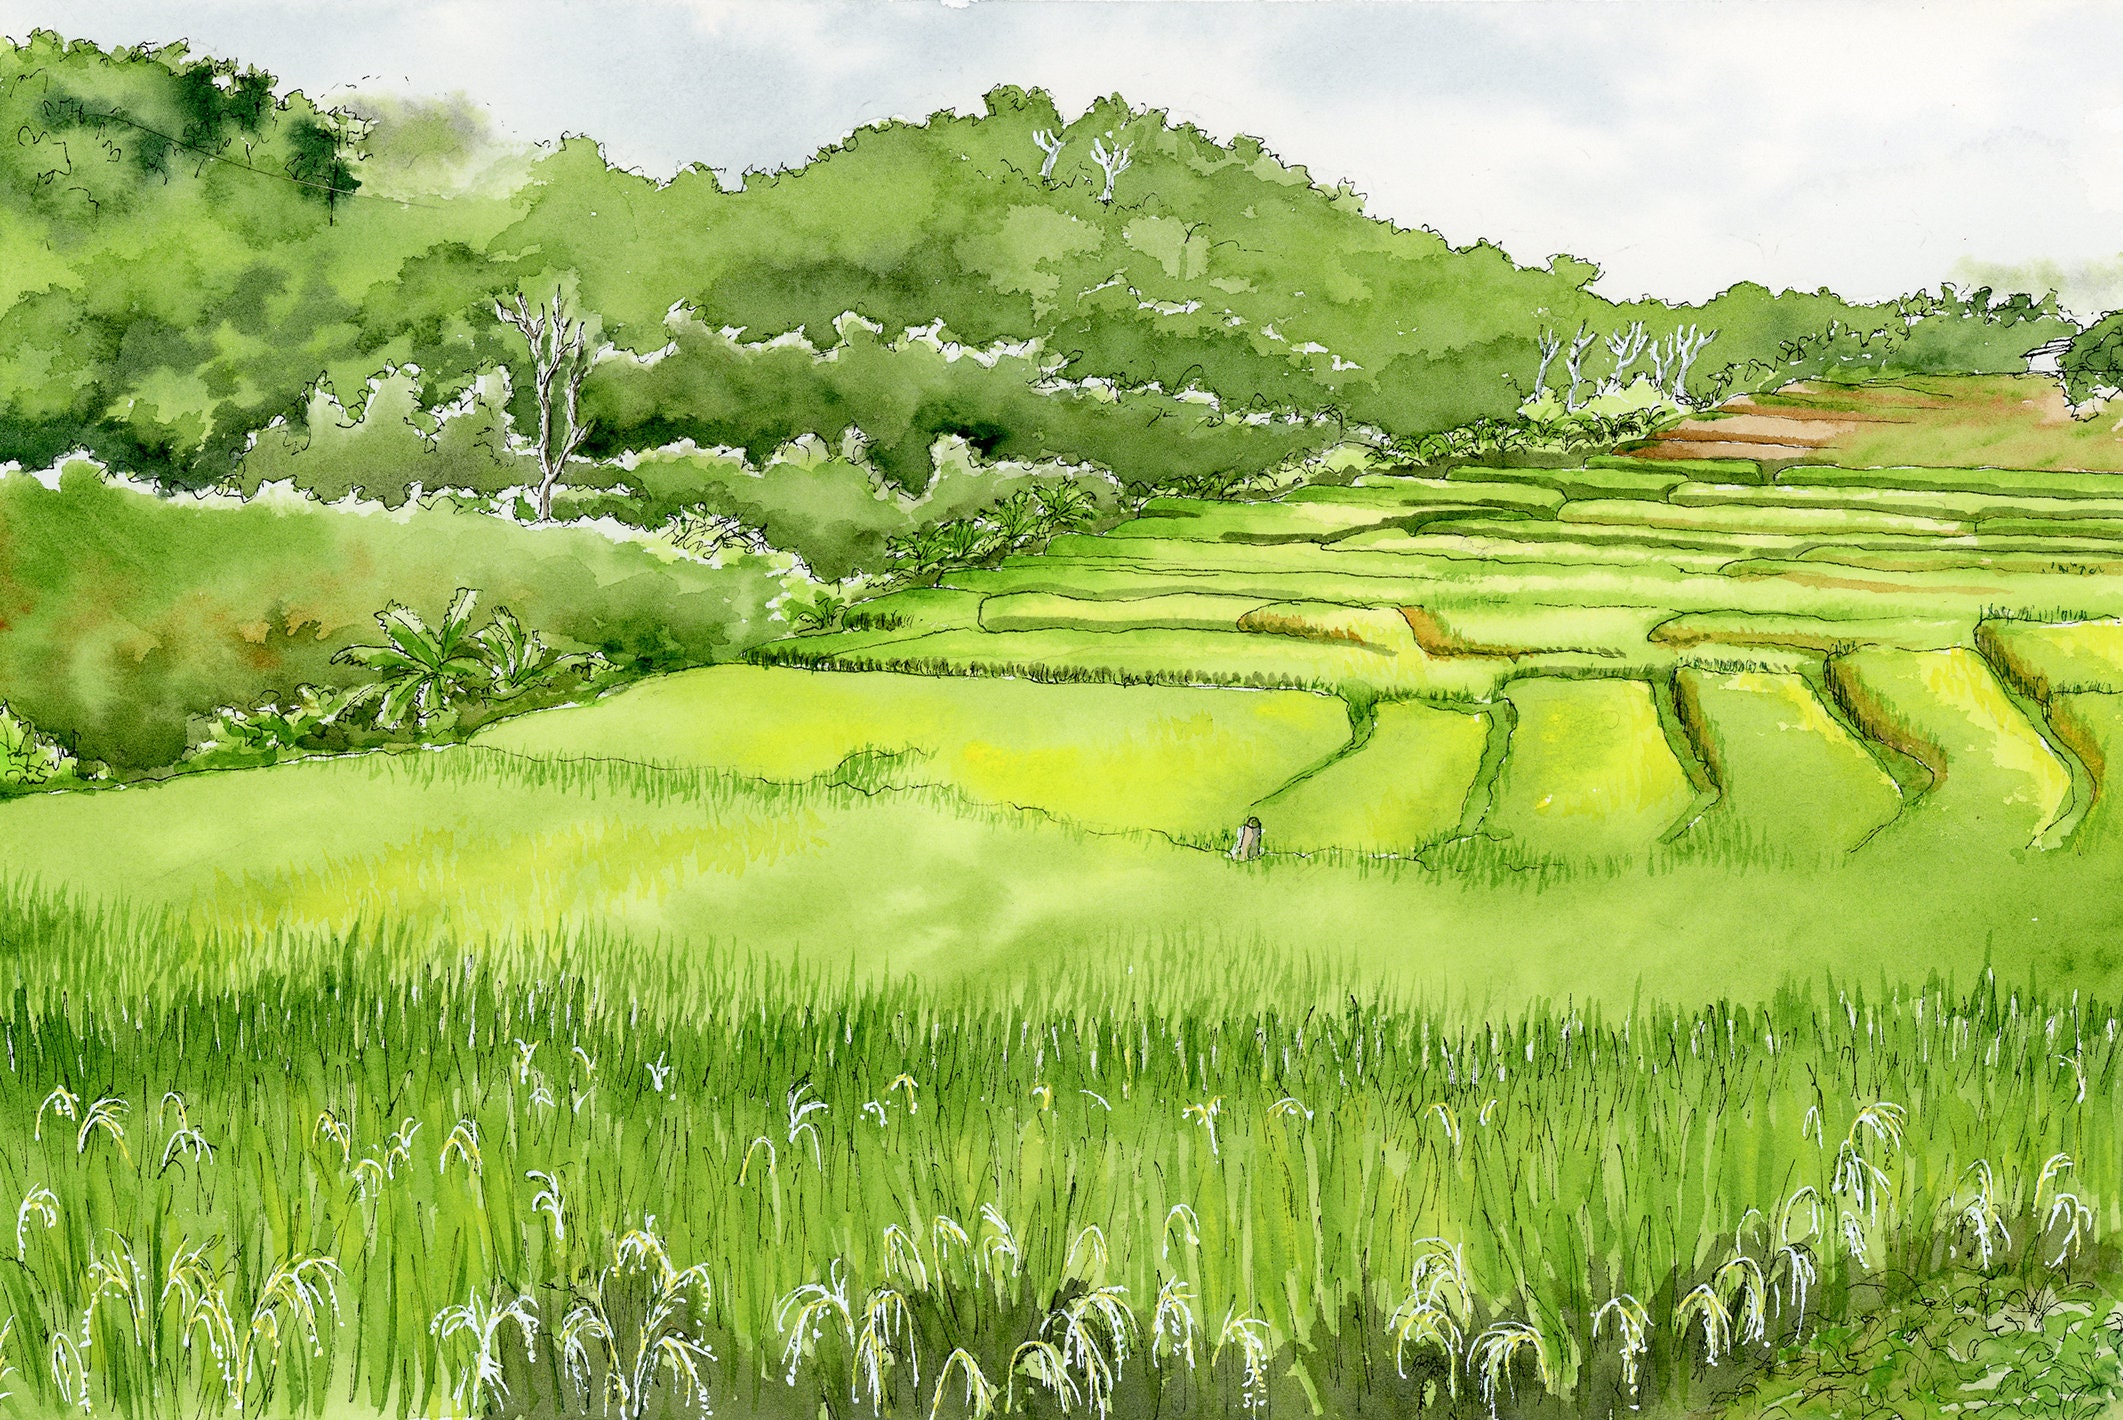 A Rice Farmer by TheUnderGroundWorld on DeviantArt